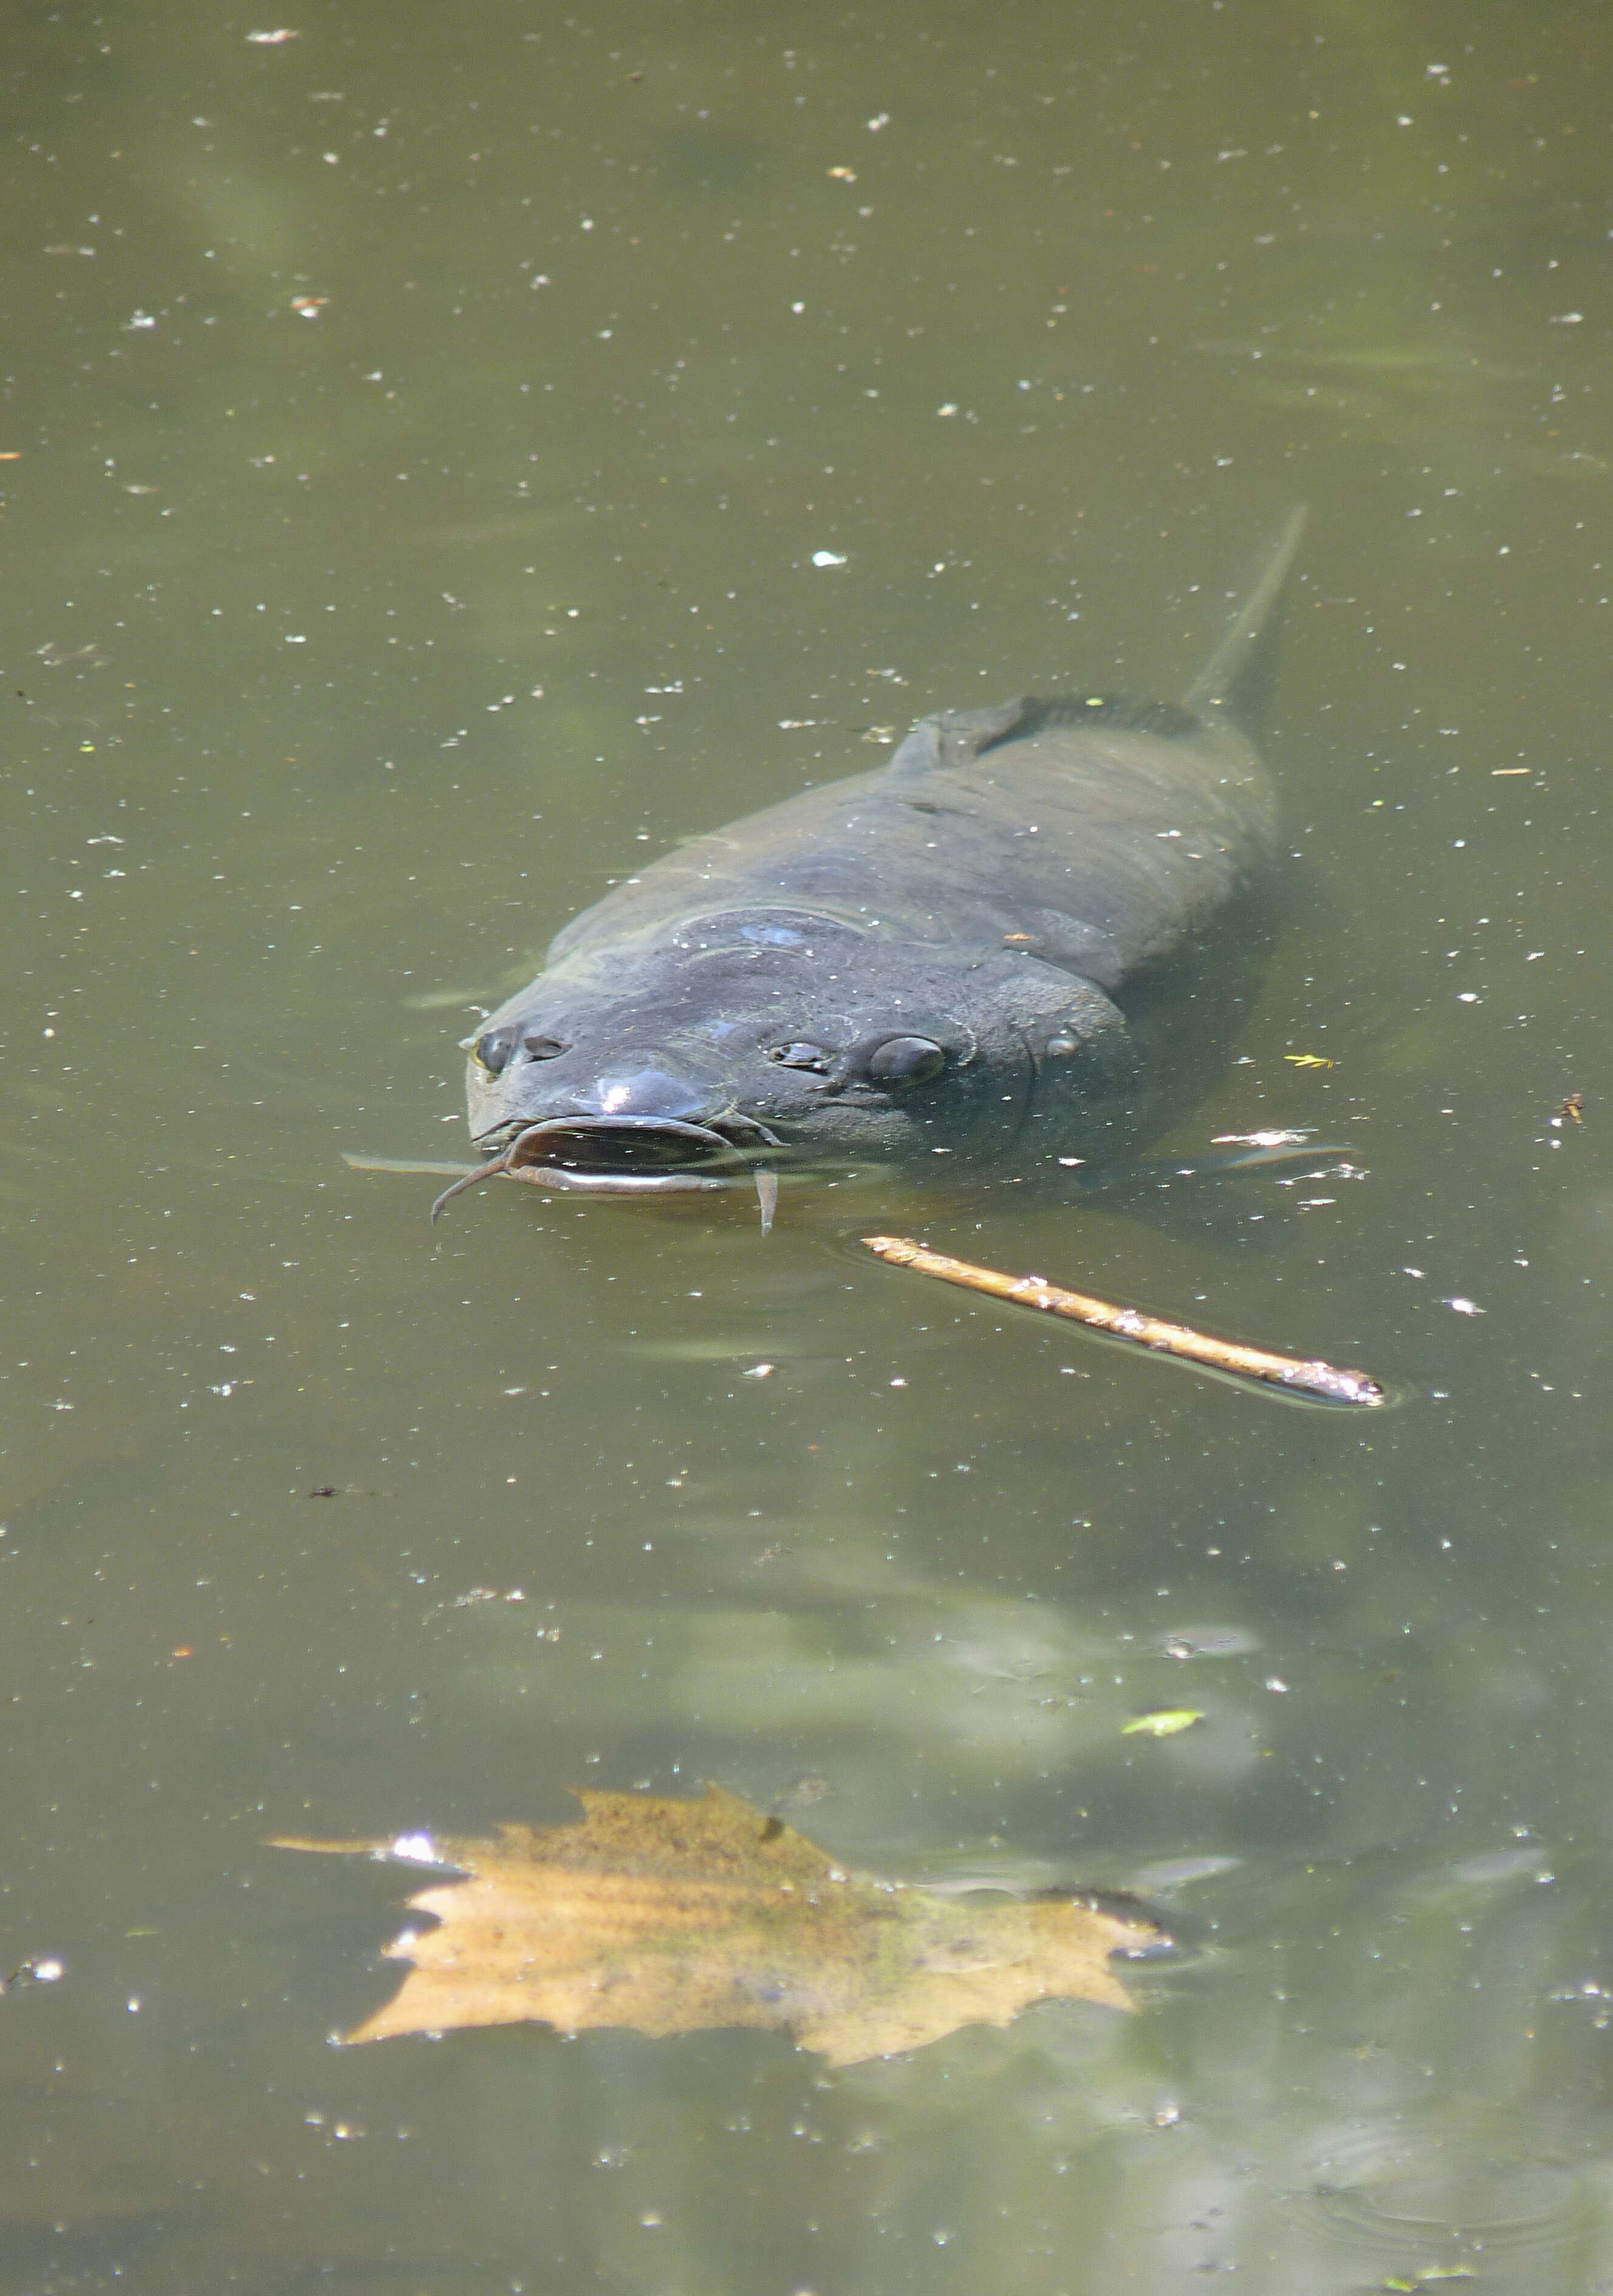 Image of common carp, carp